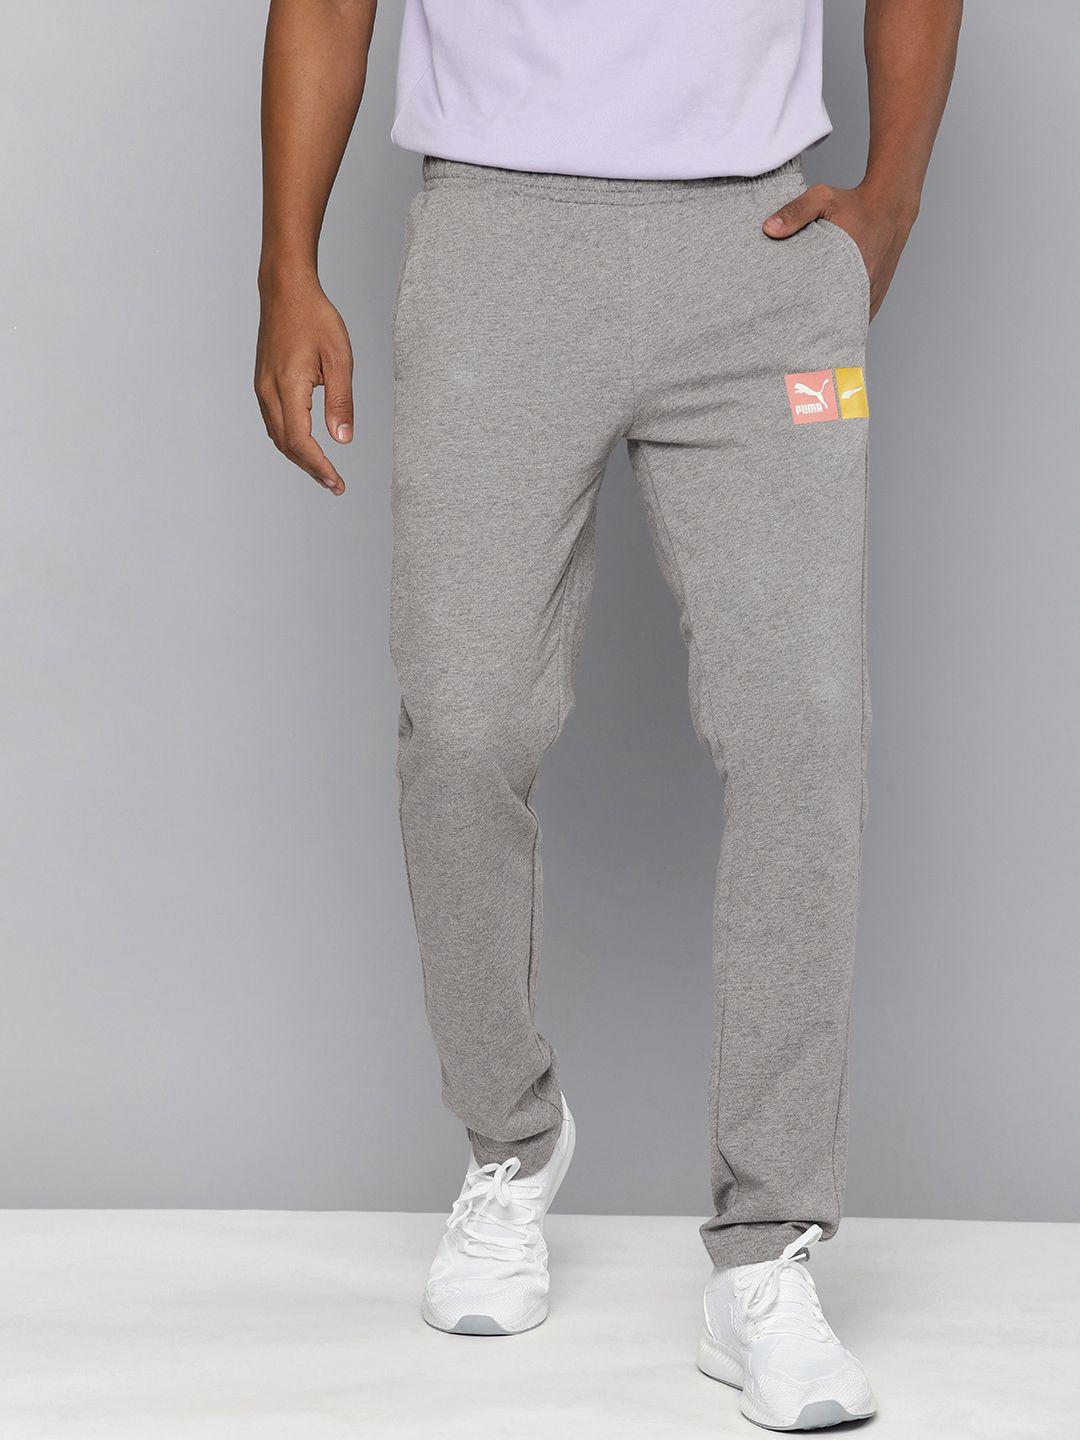 puma-men-grey-melange-brand-logo-printed-slim-fit-graphic-track-pants